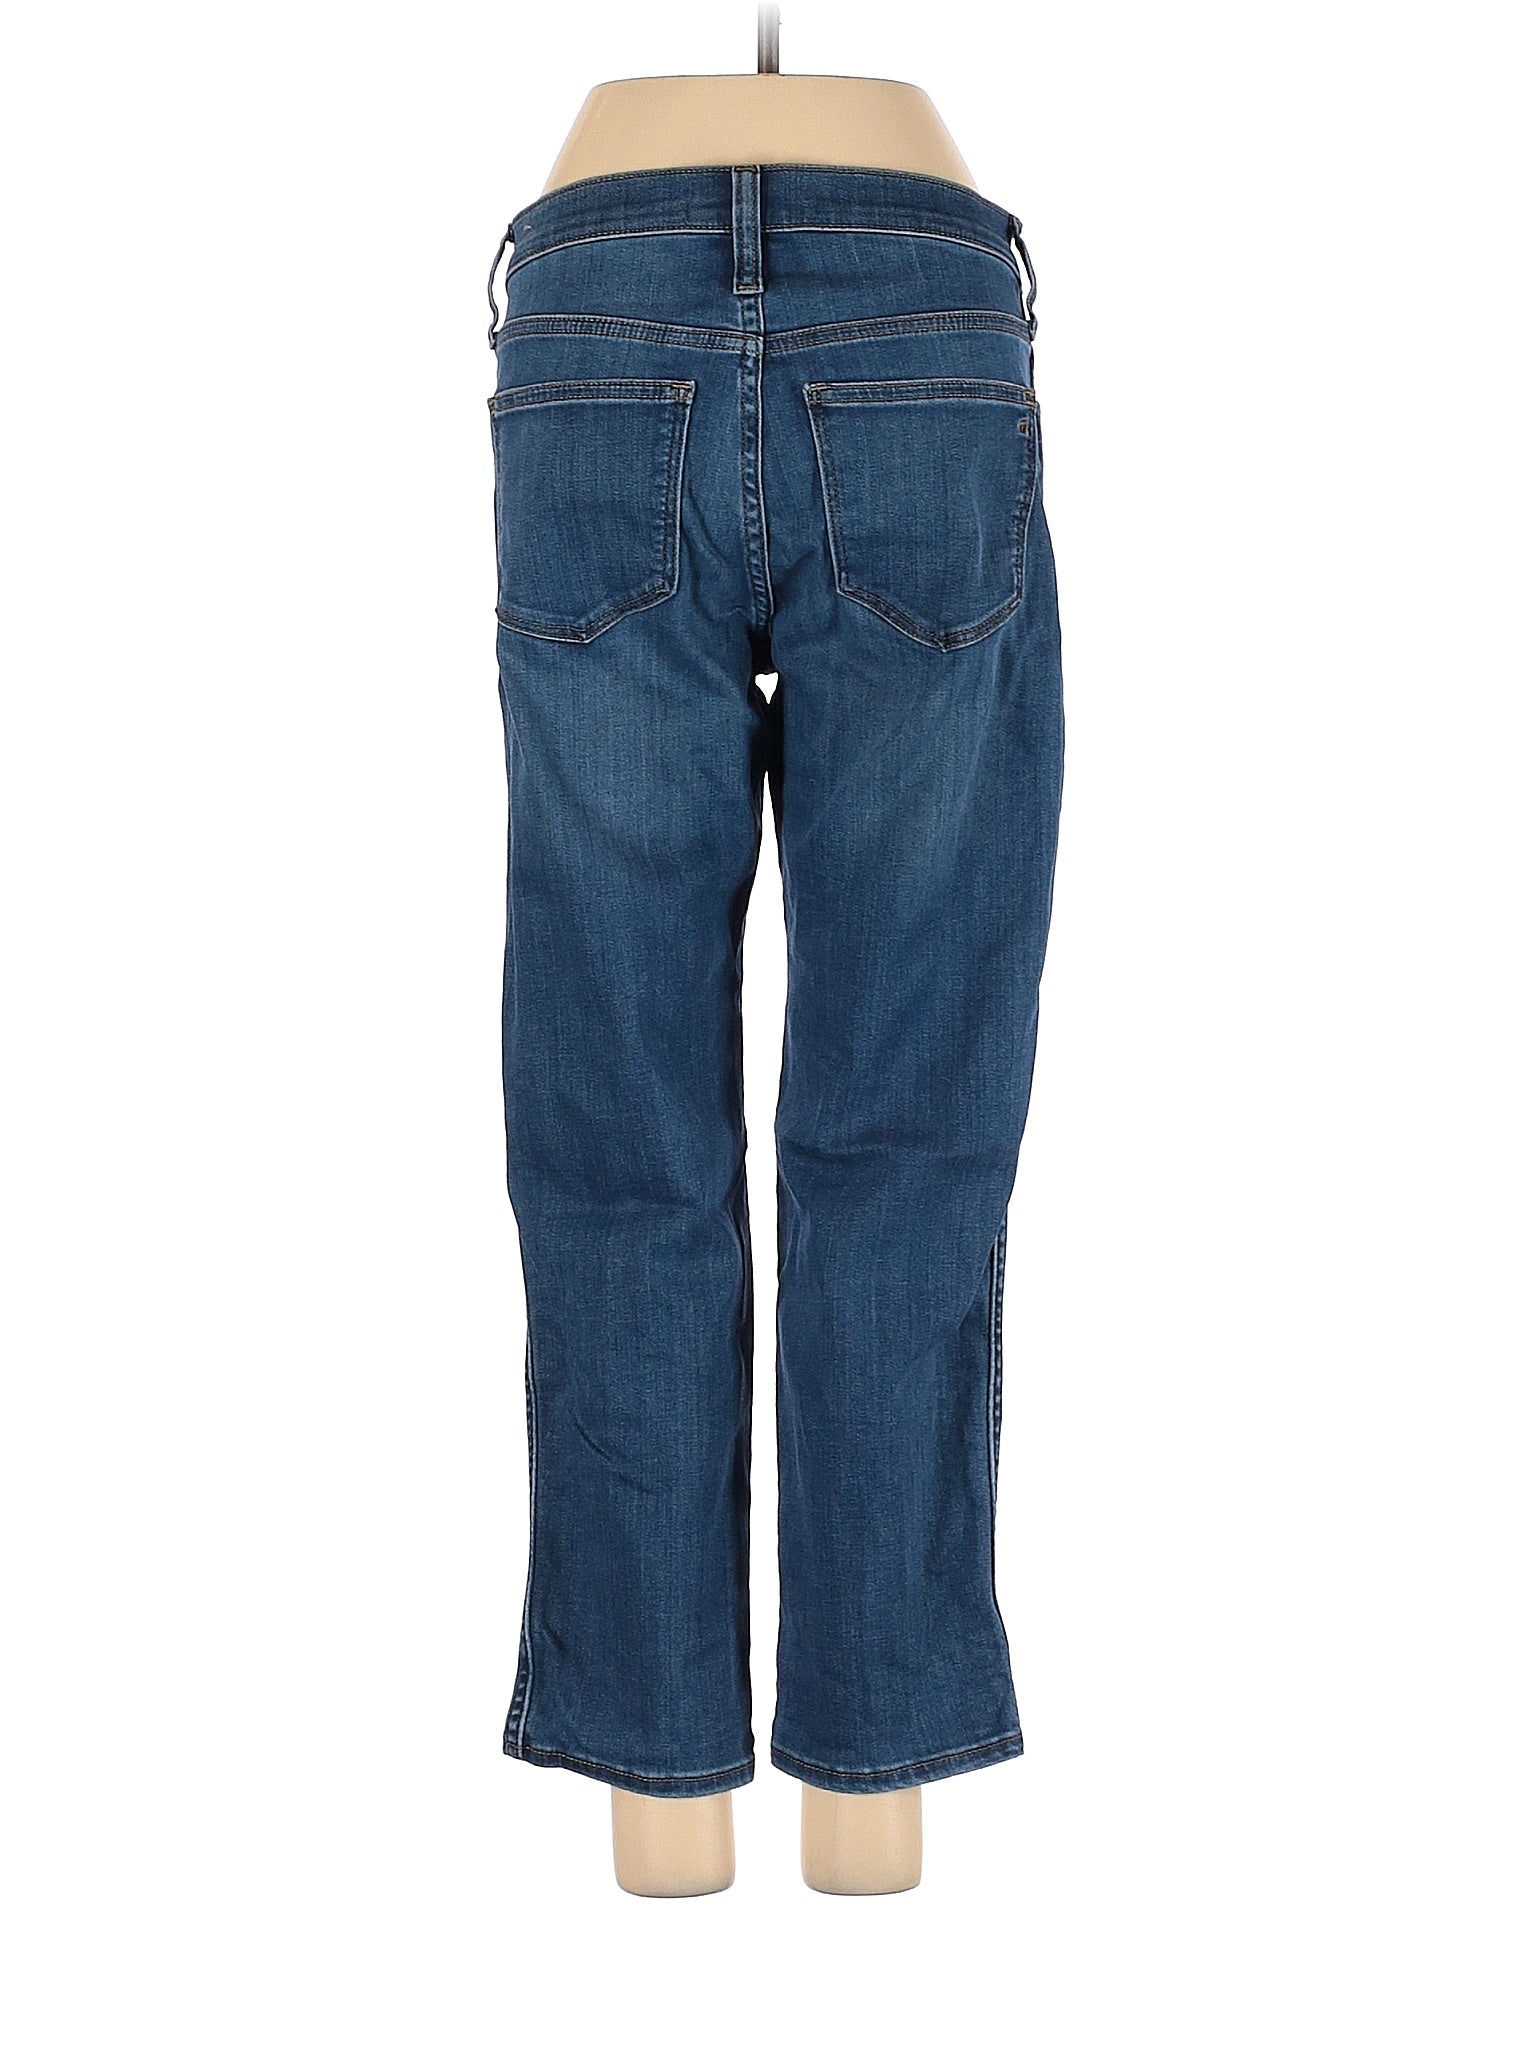 Mid-Rise Boyjeans Jeans in Dark Wash waist size - 26 P